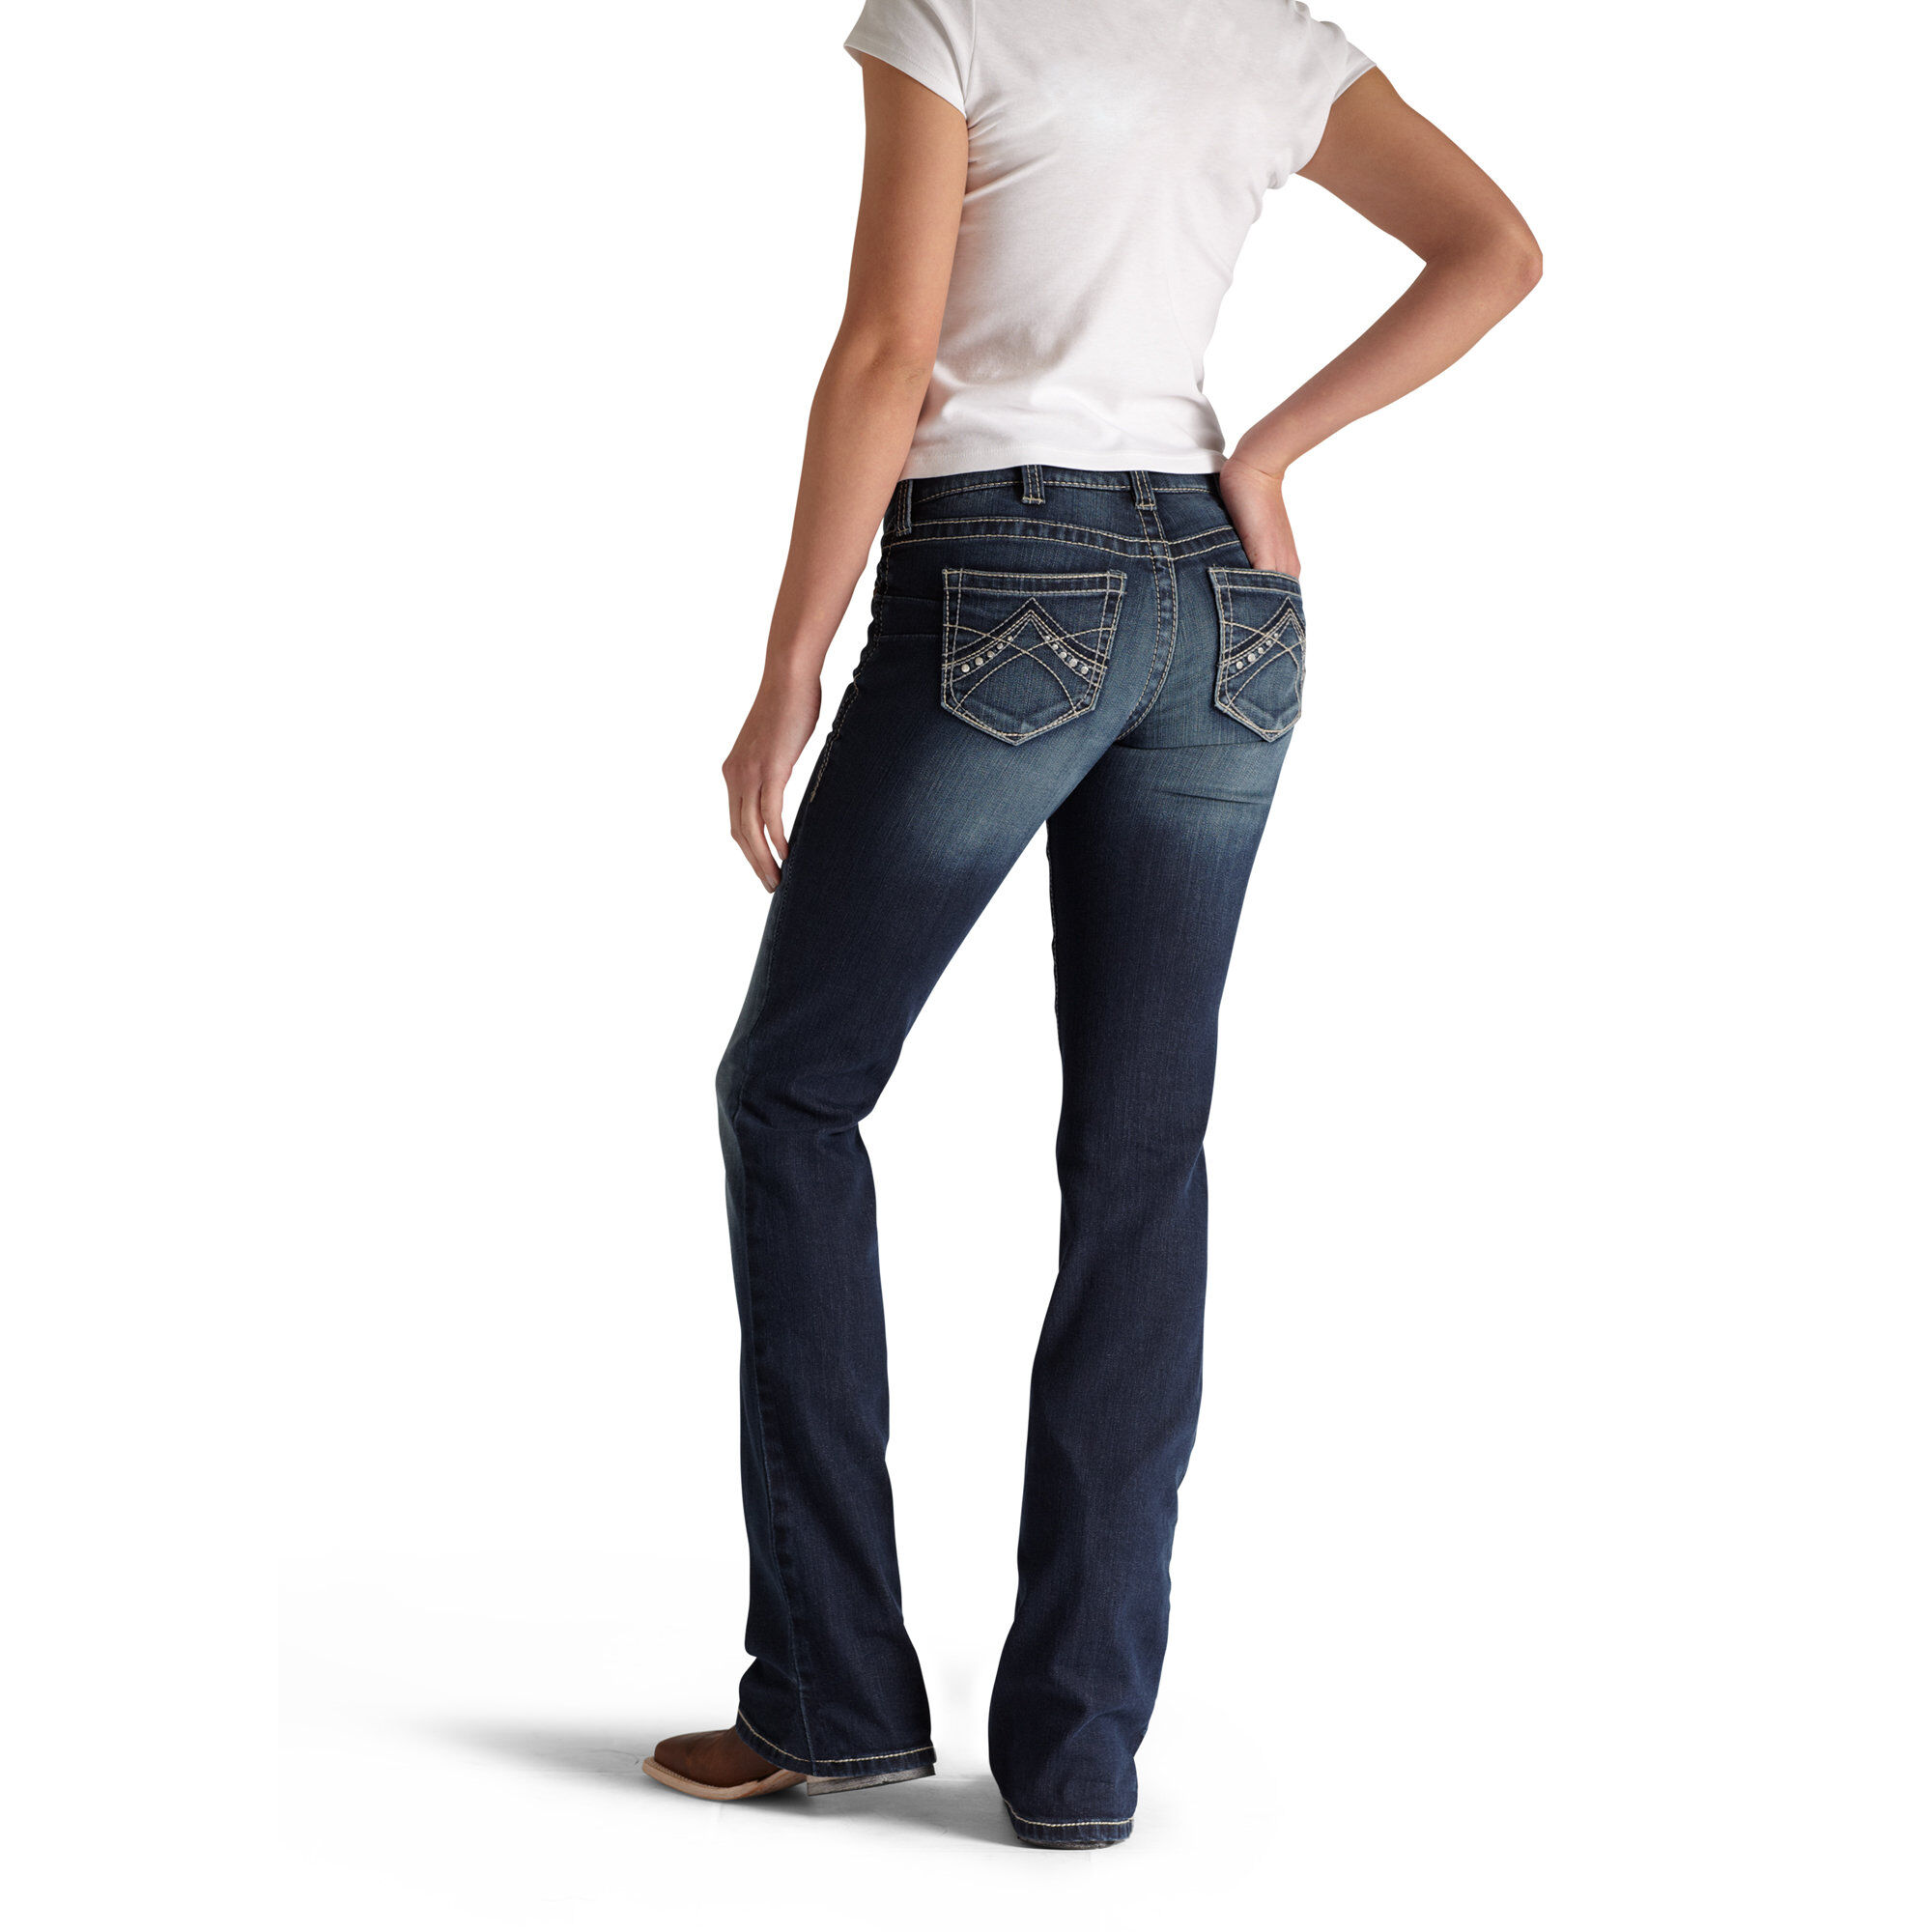 calvin klein skinny jeans womens